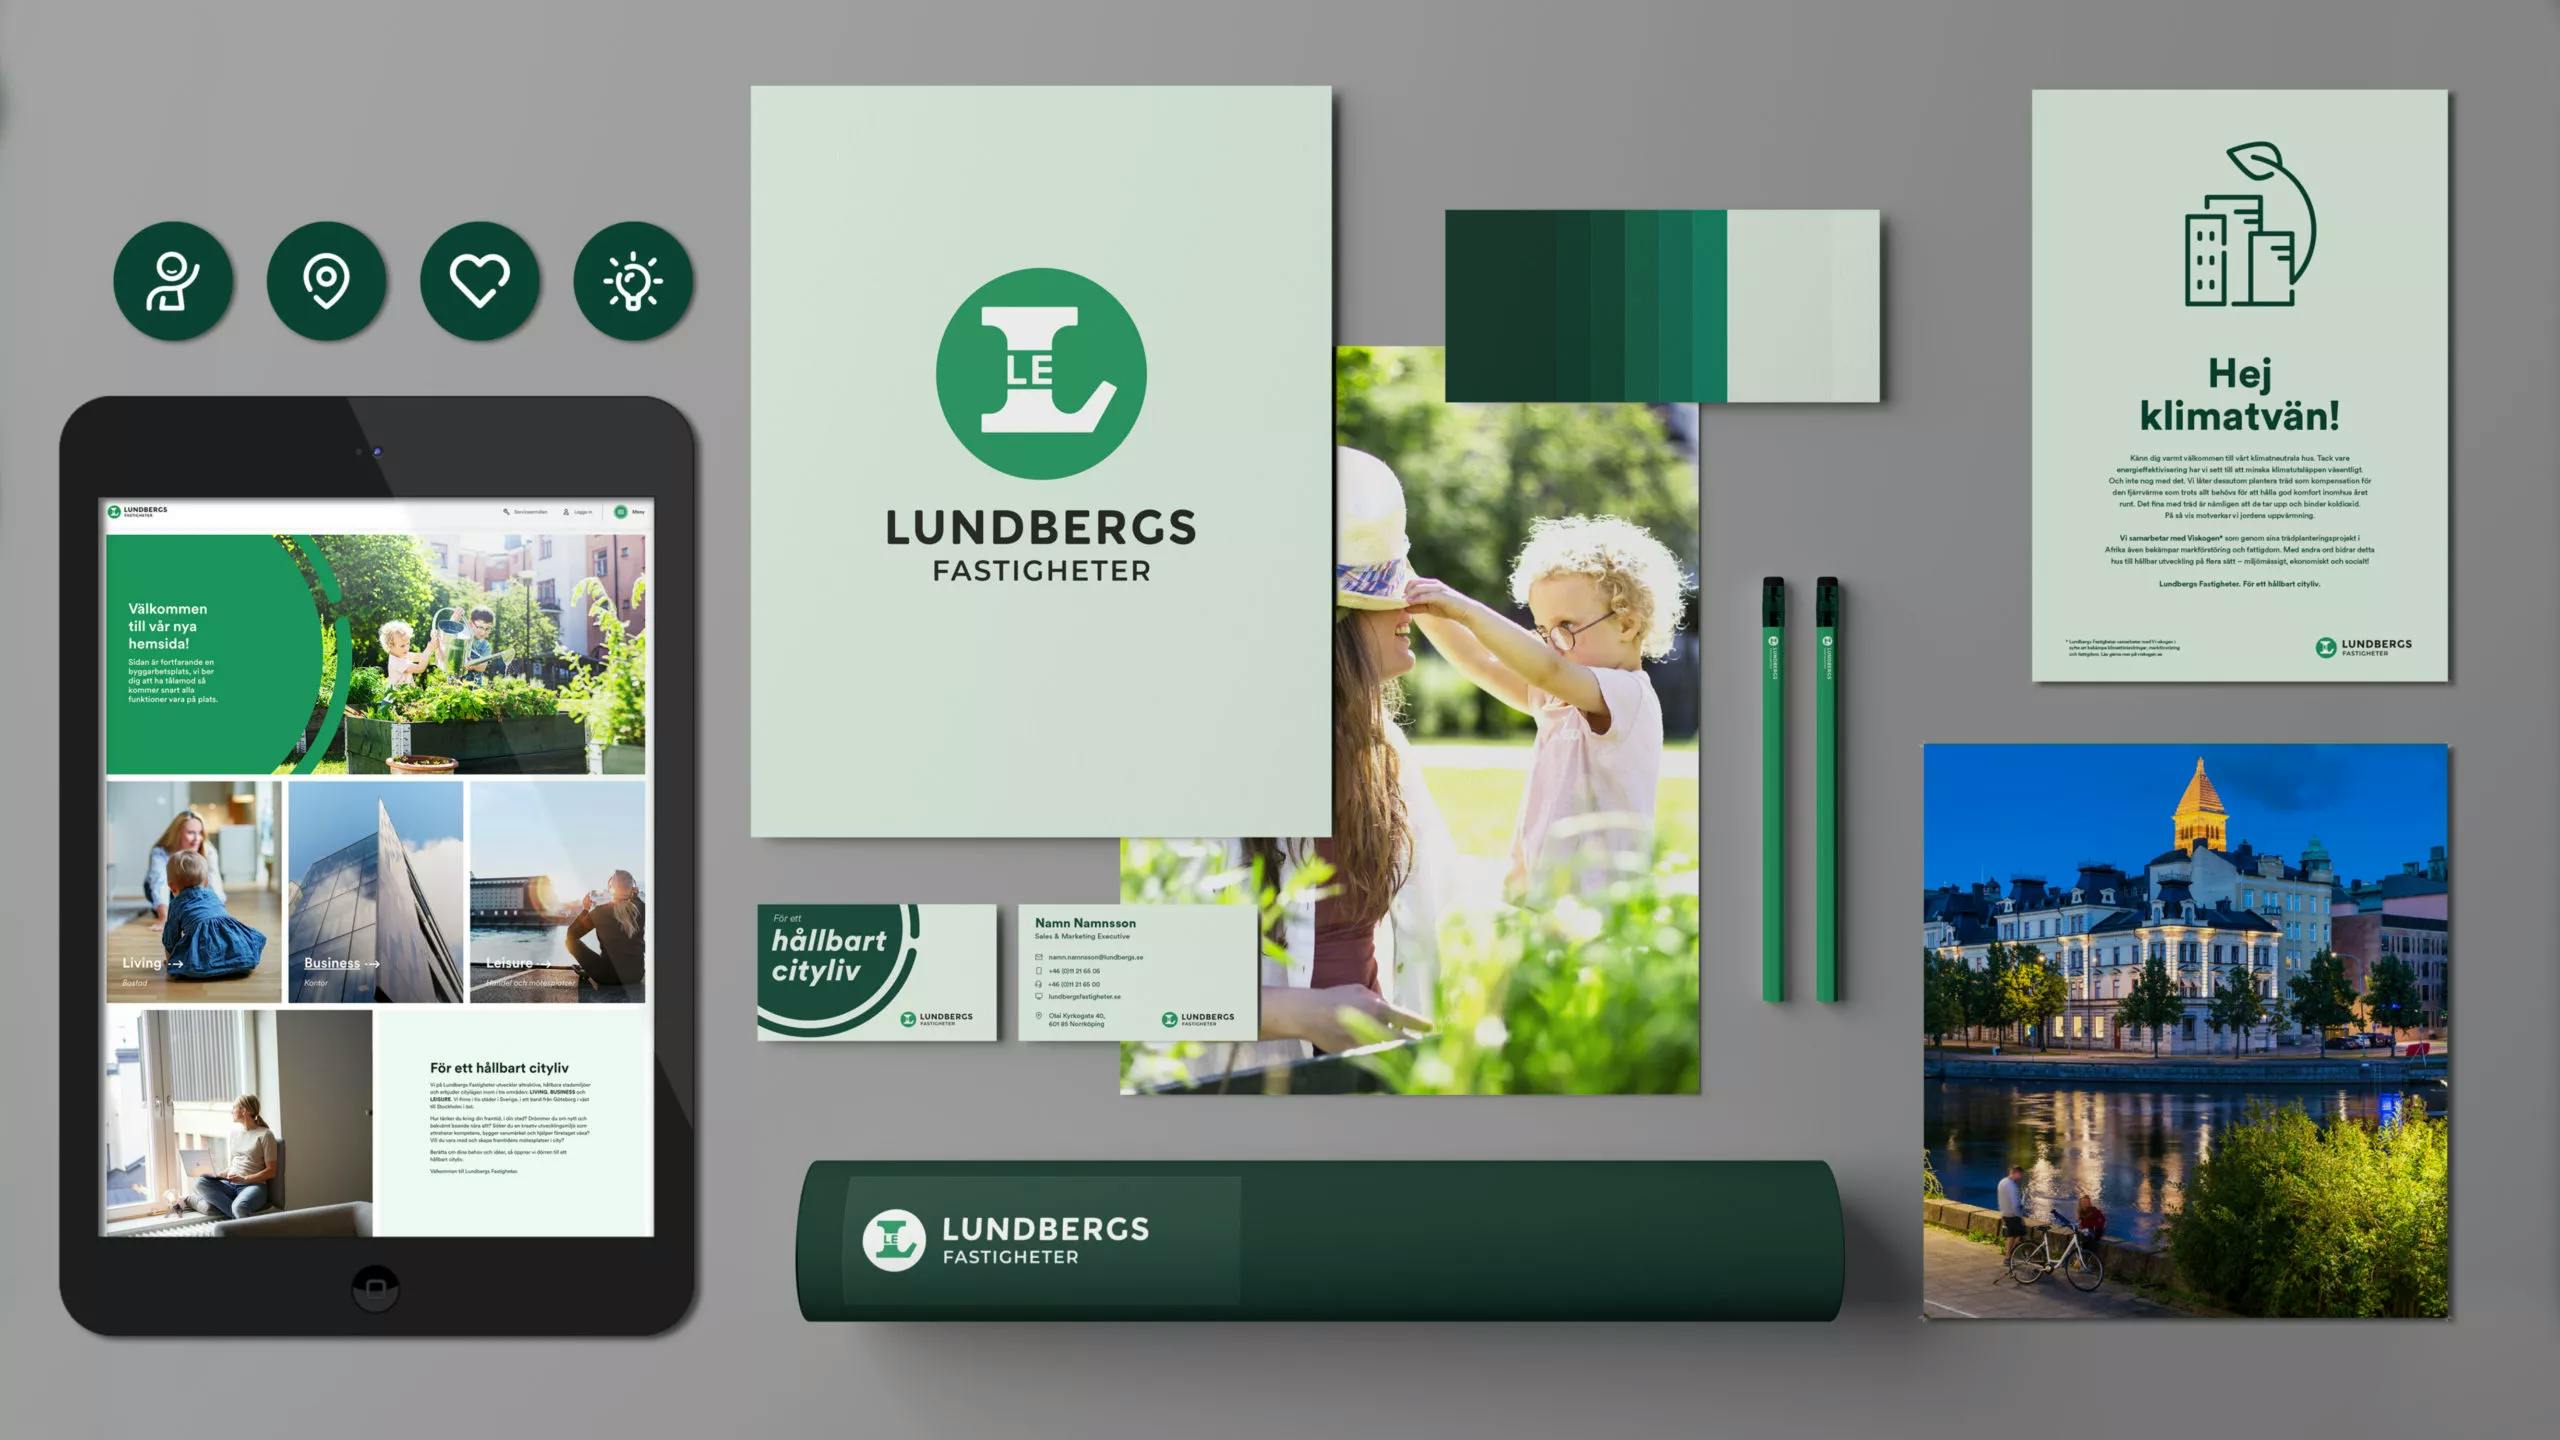 Lundbergs nye visuelle brand platform